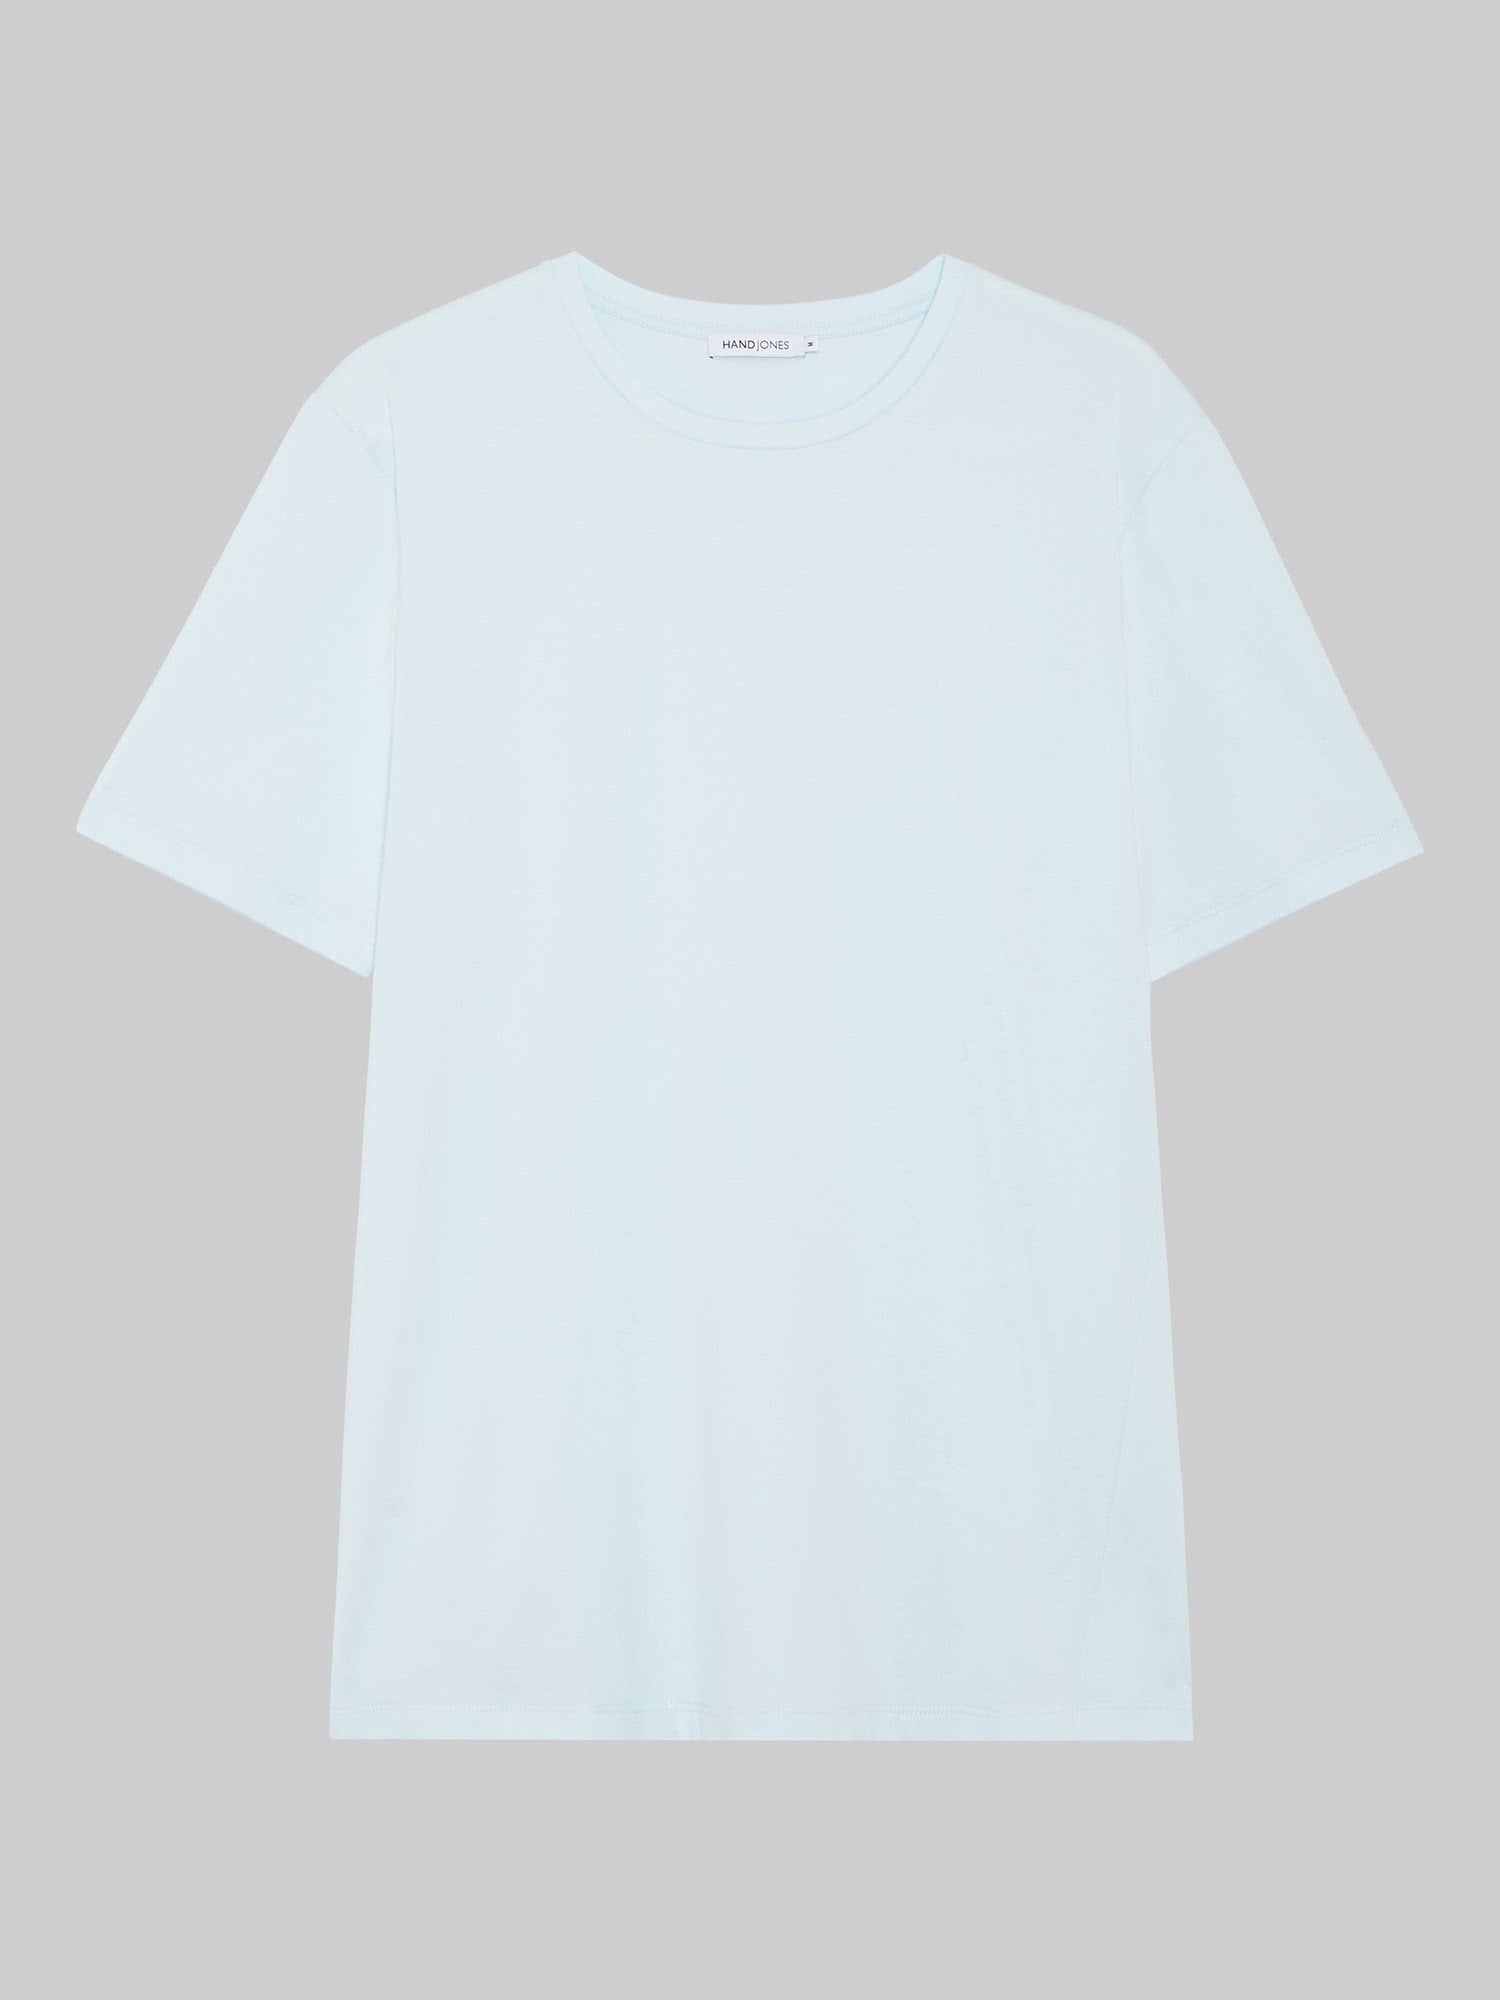 Men's White cotton tshirt | Hand & Jones